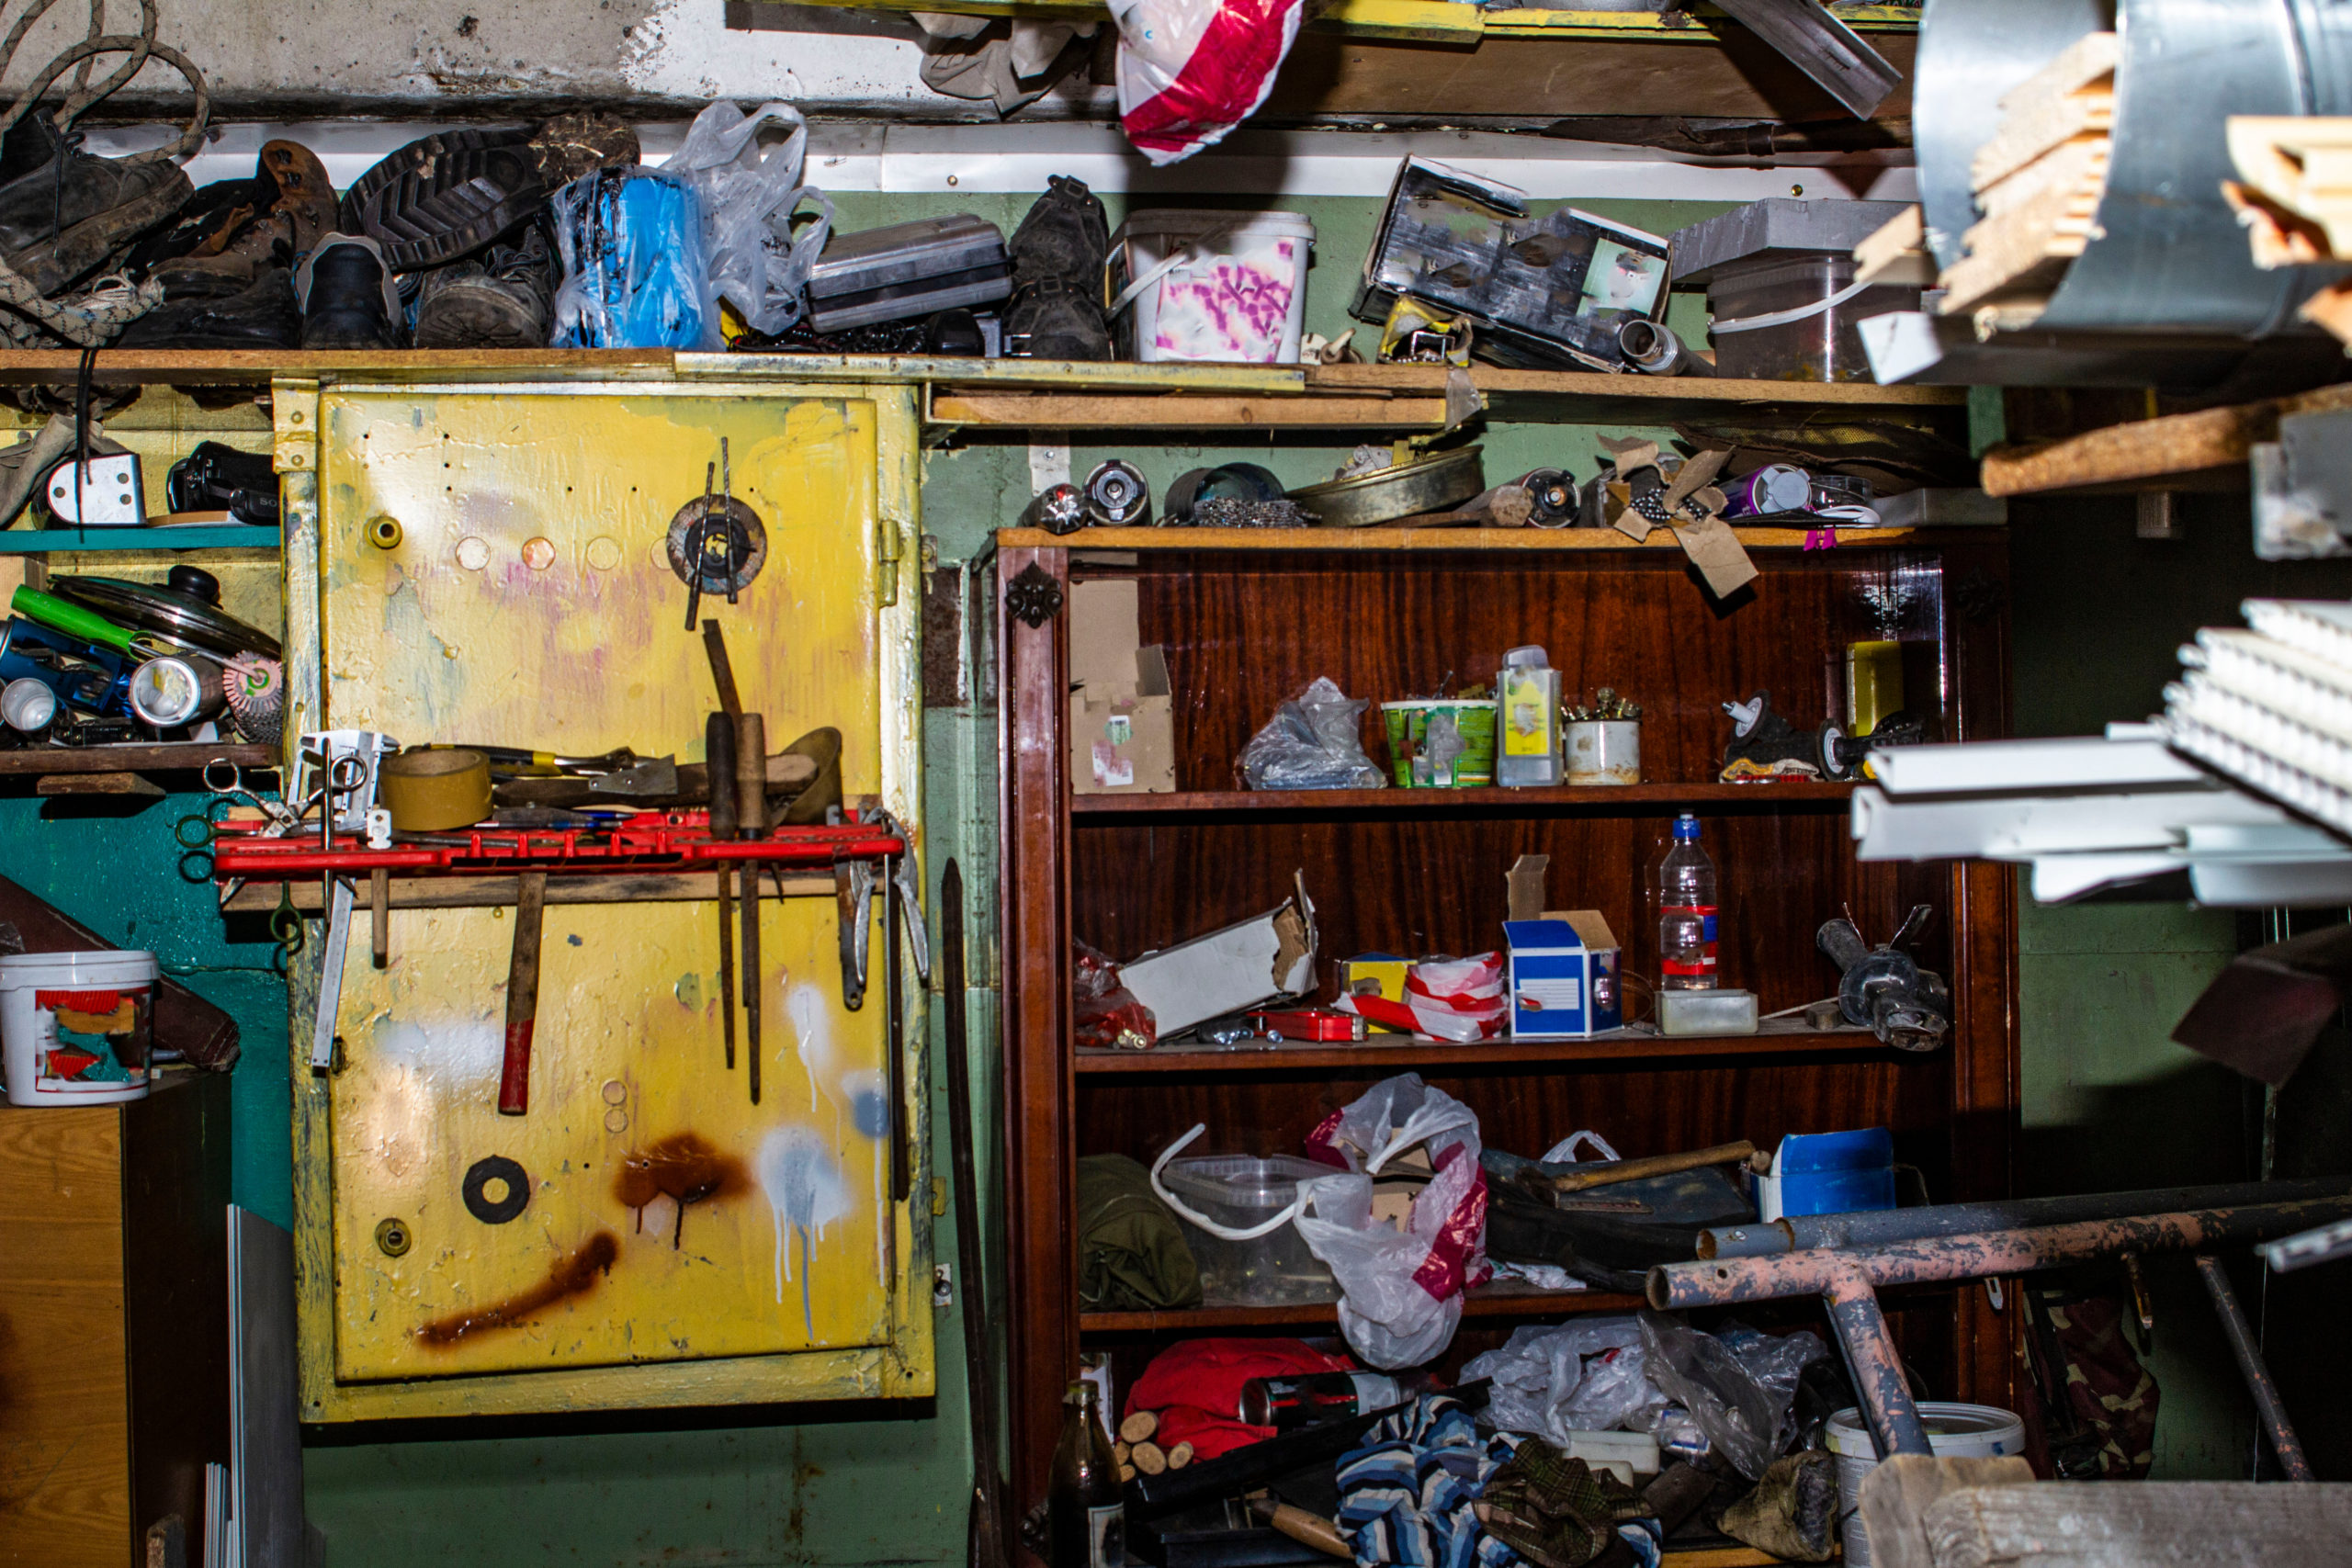 A cluttered garage full of junk